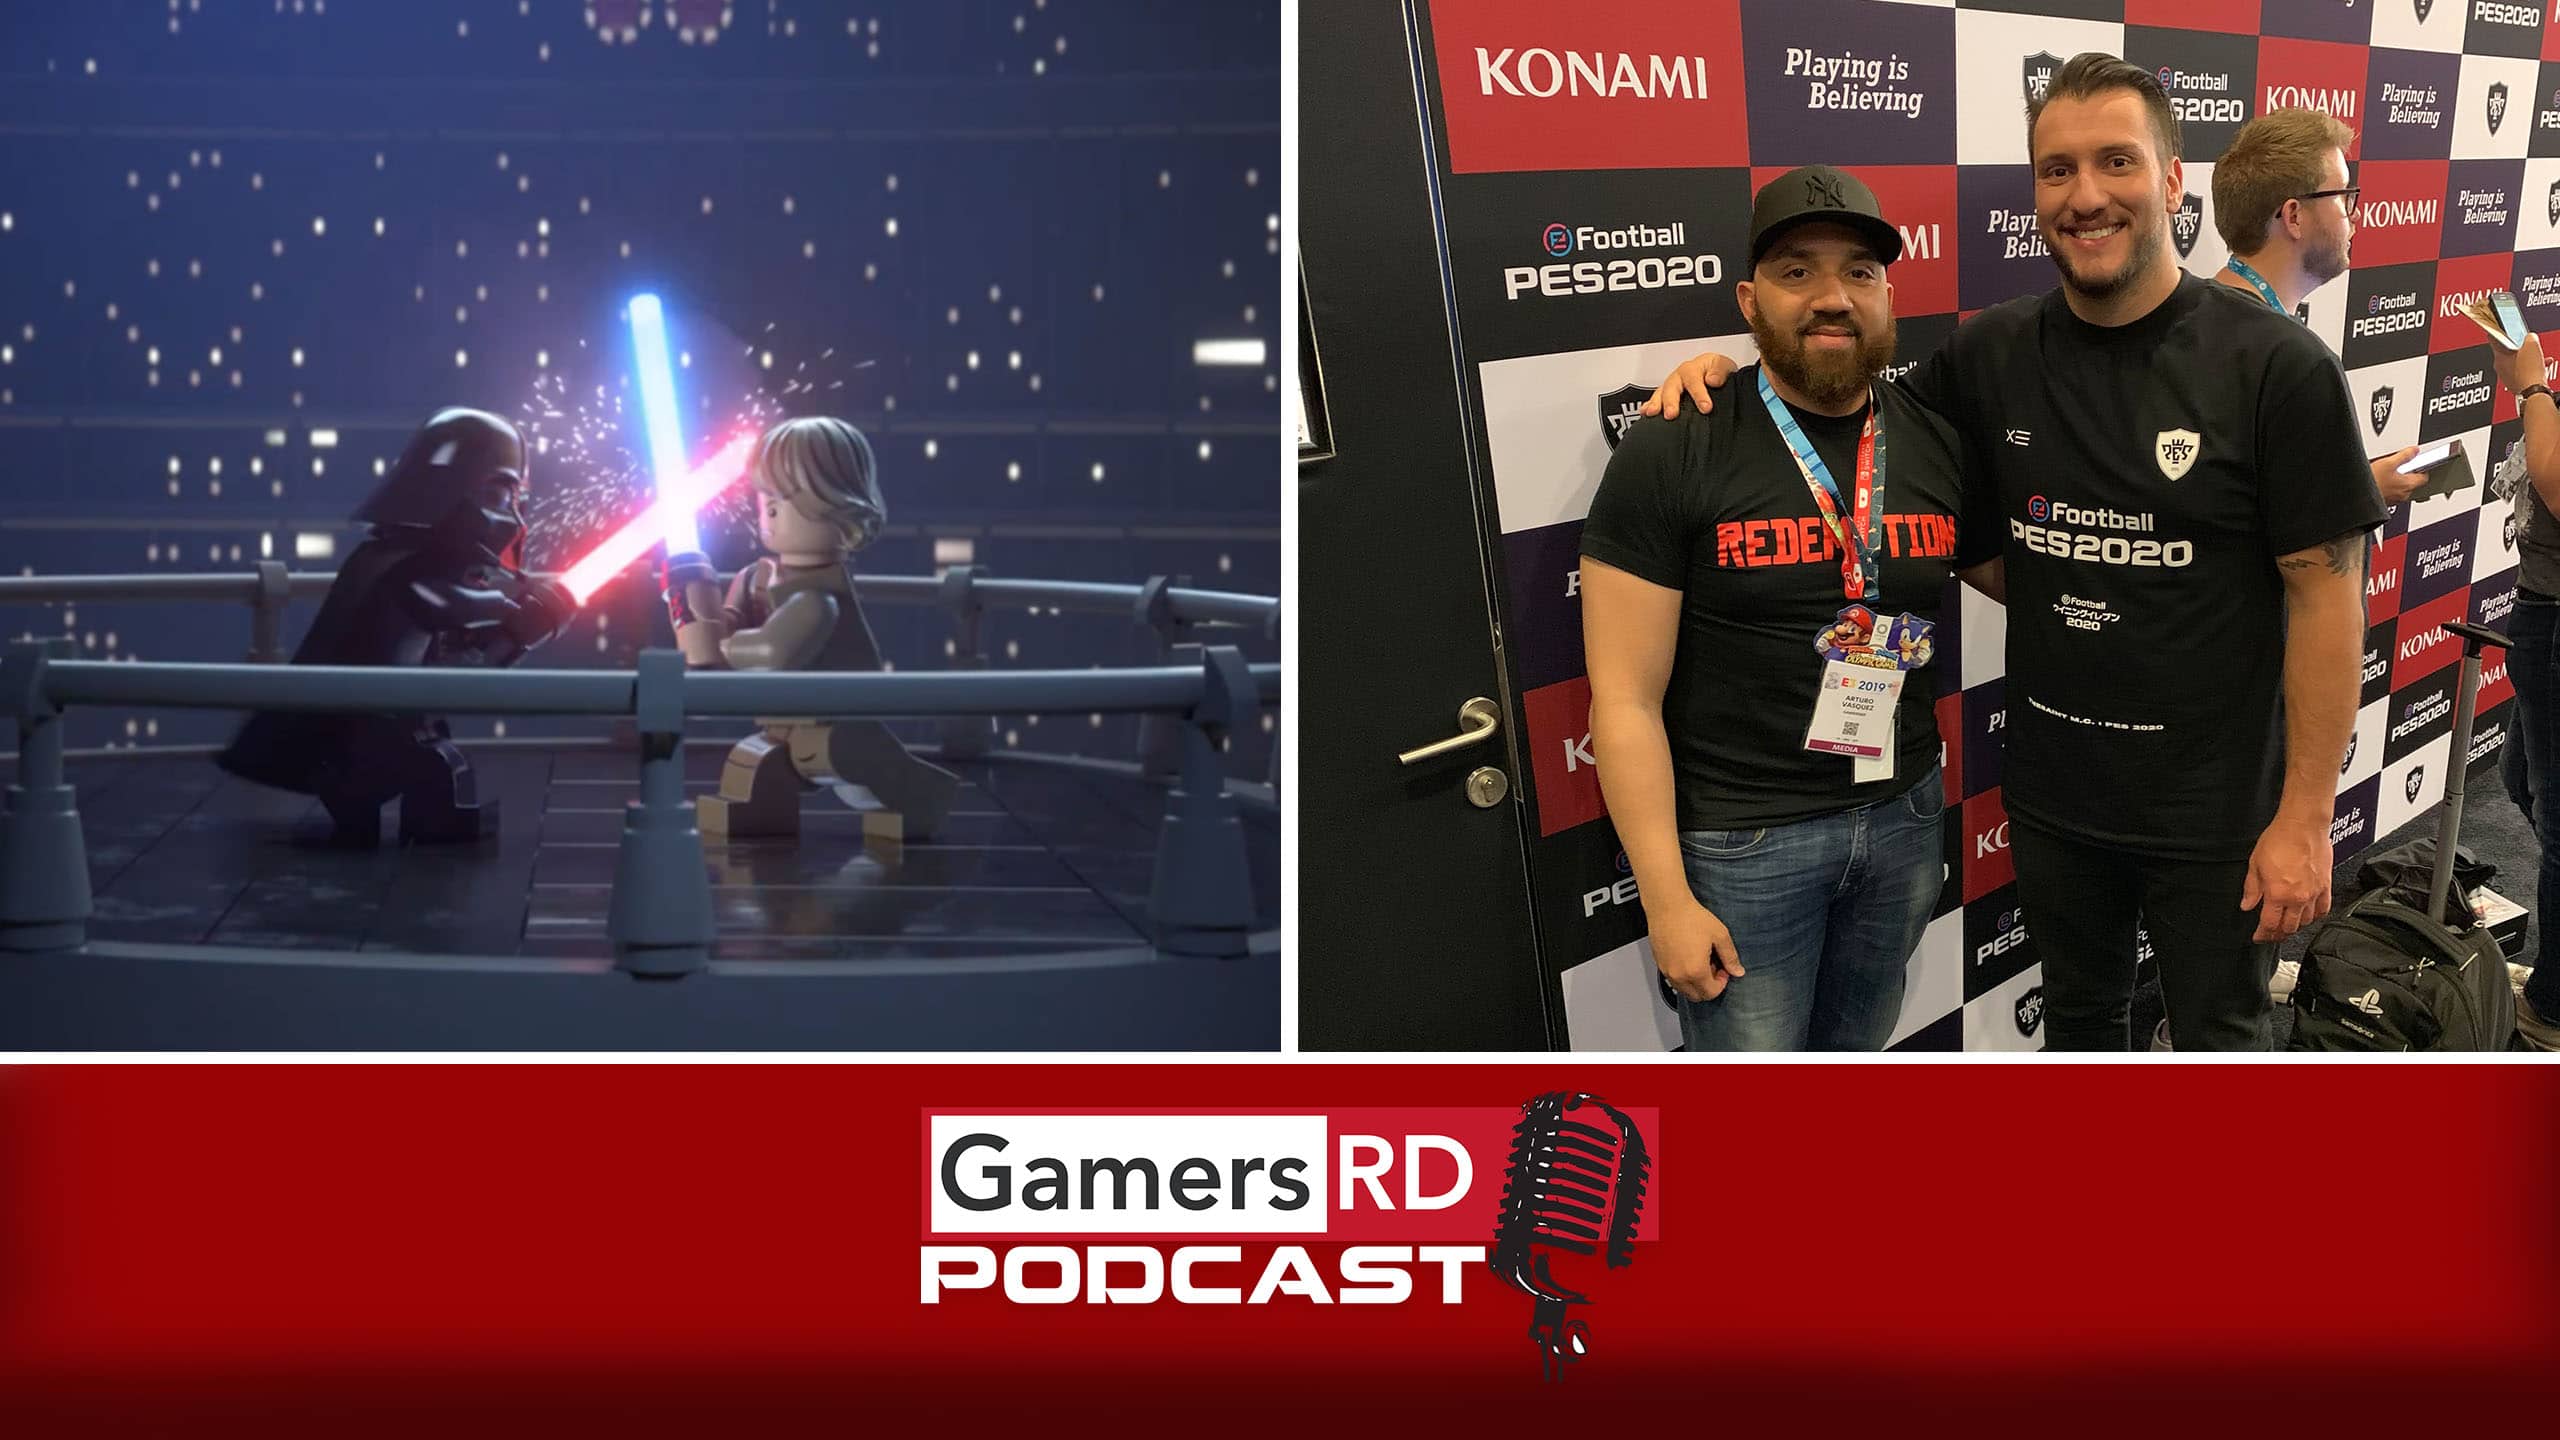 GamersRD Podcast #80 Impresiones de Lego Star Wars The Skywalker Saga entrevista a Andre Bronzoni de PES 2020